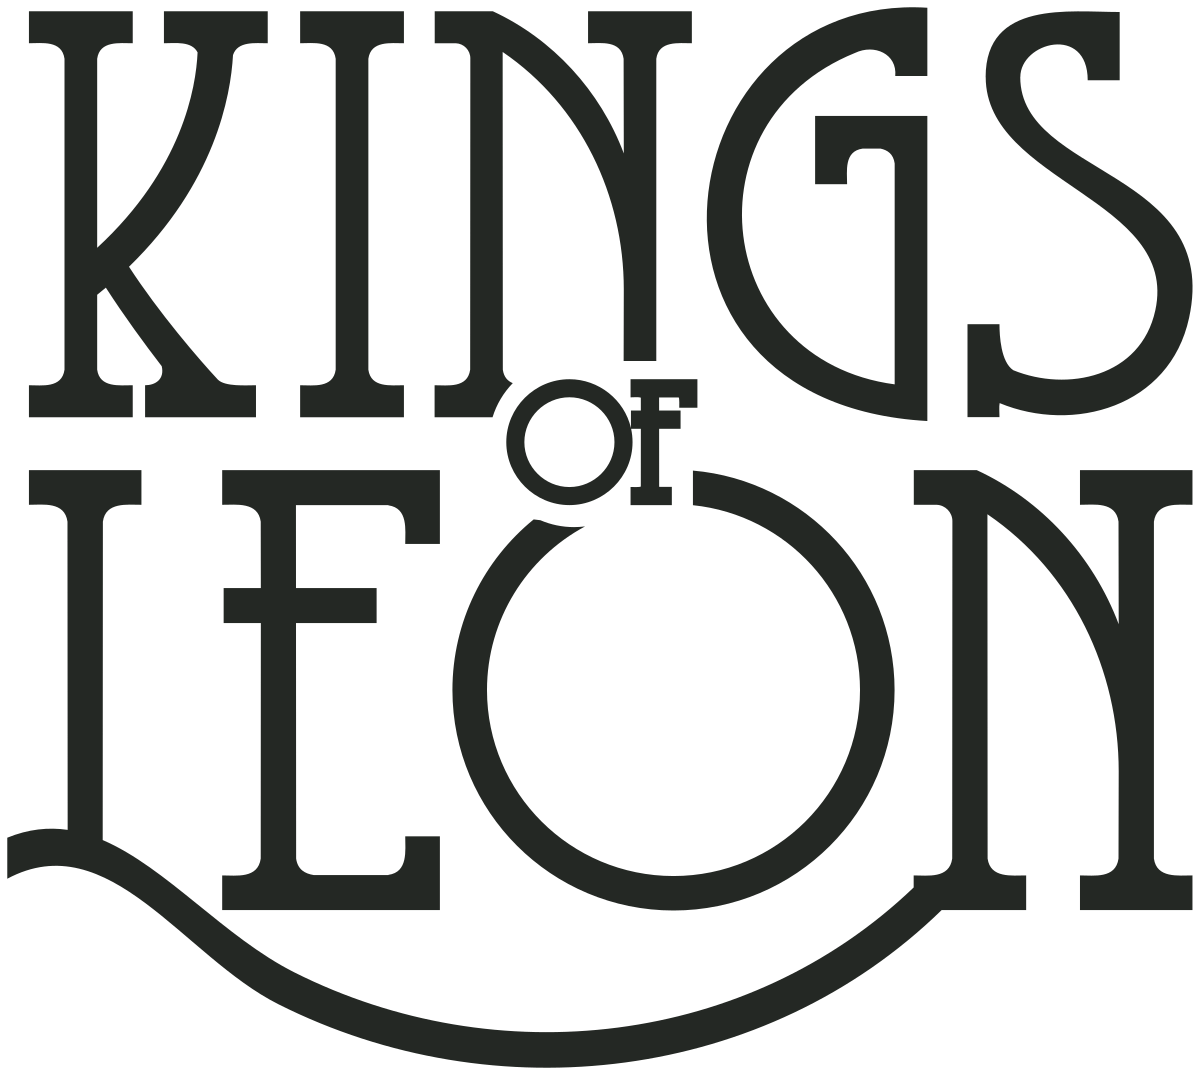 Kings Of Leon logo